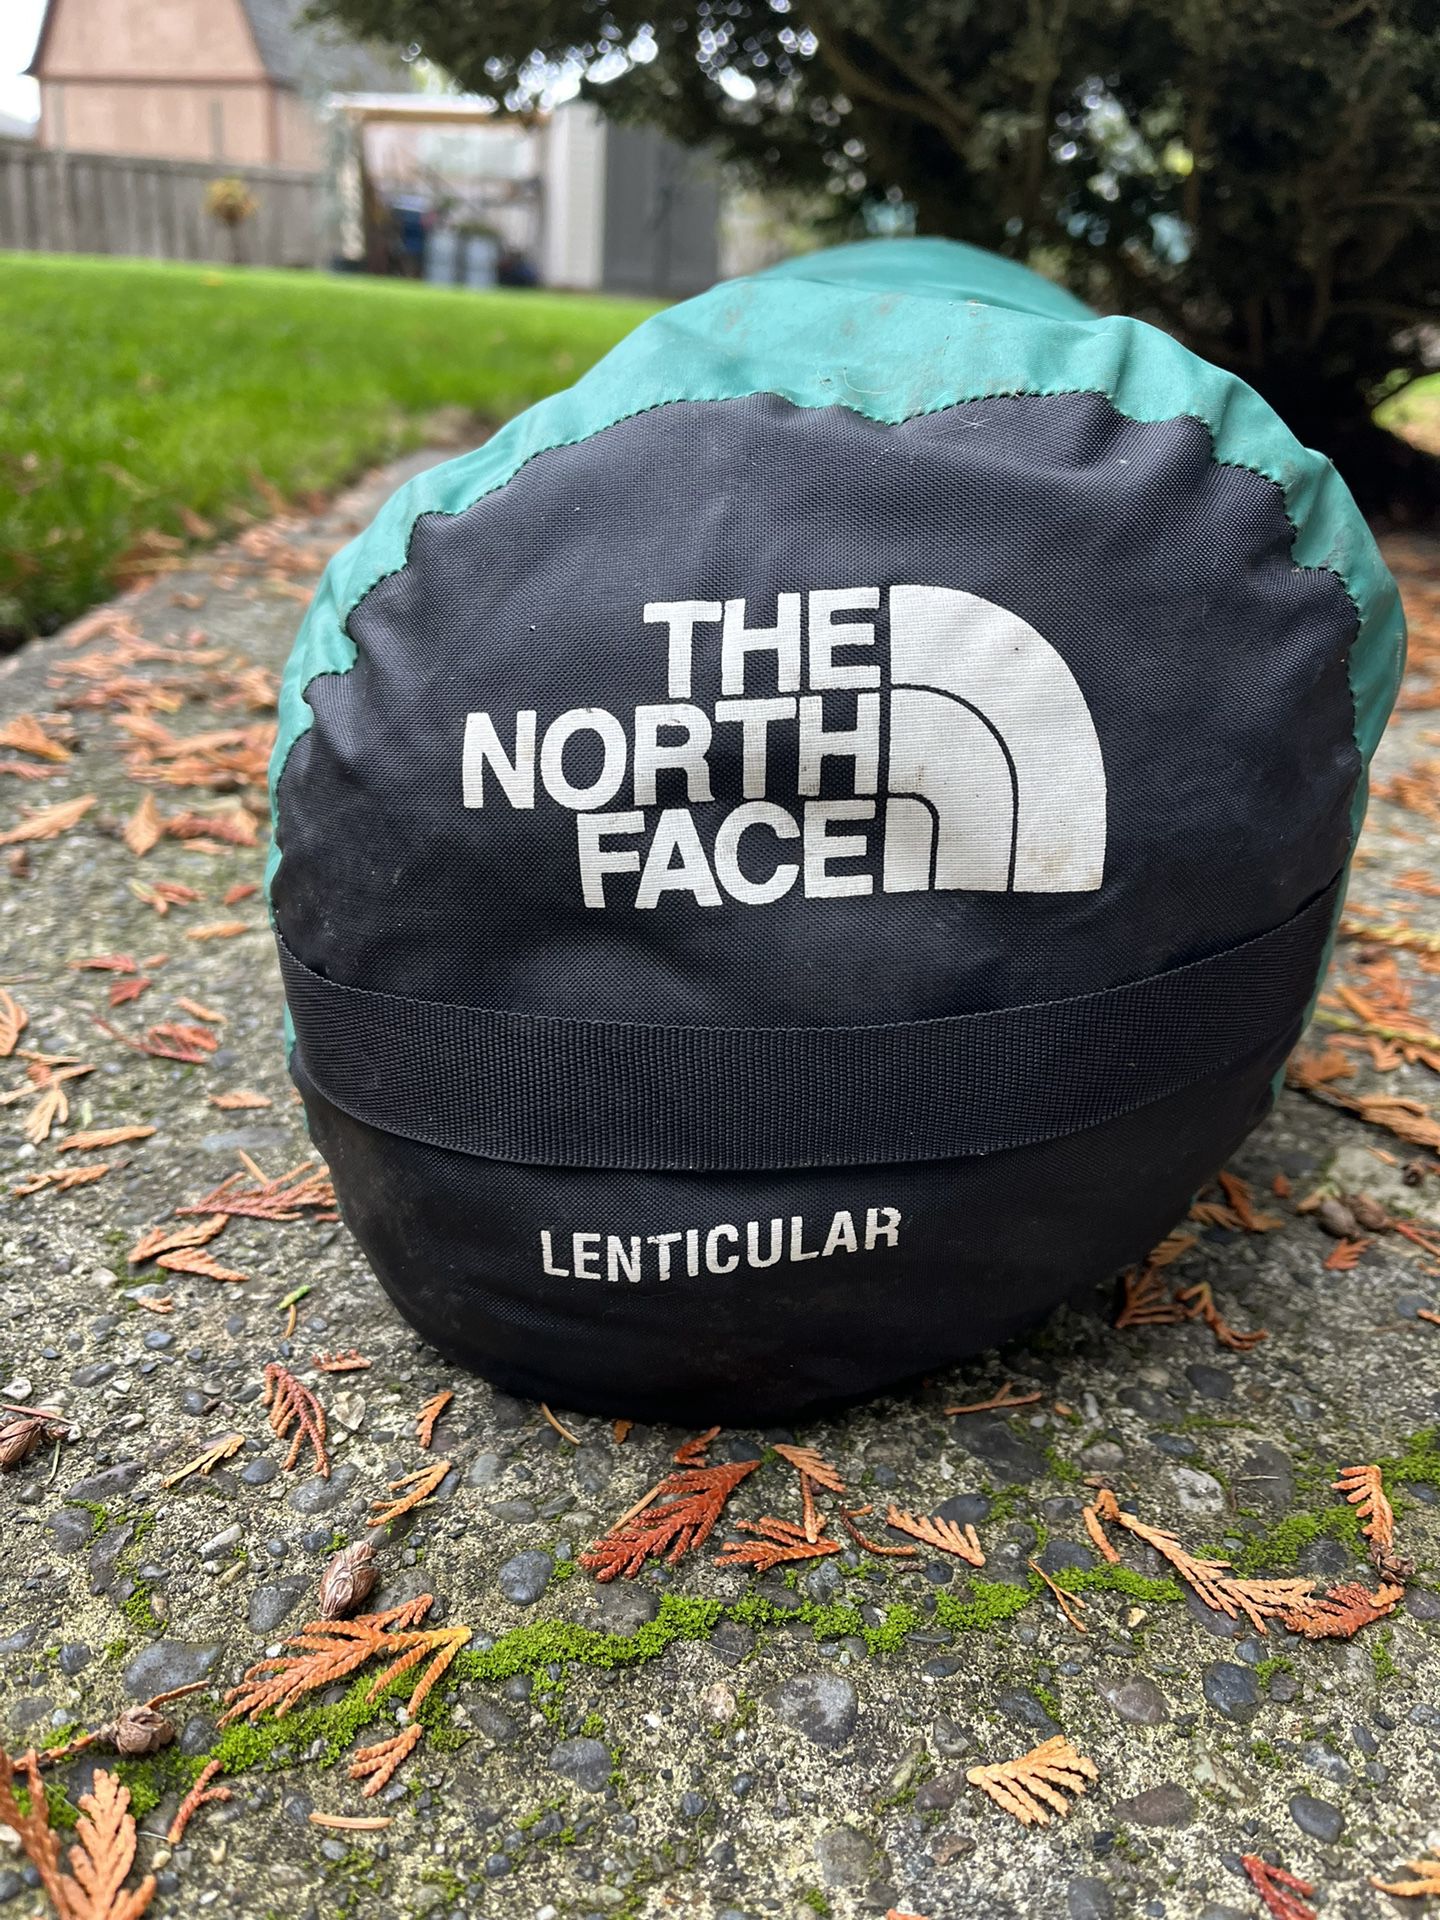  North Face Lenticular 3 Person 4 Season Tent